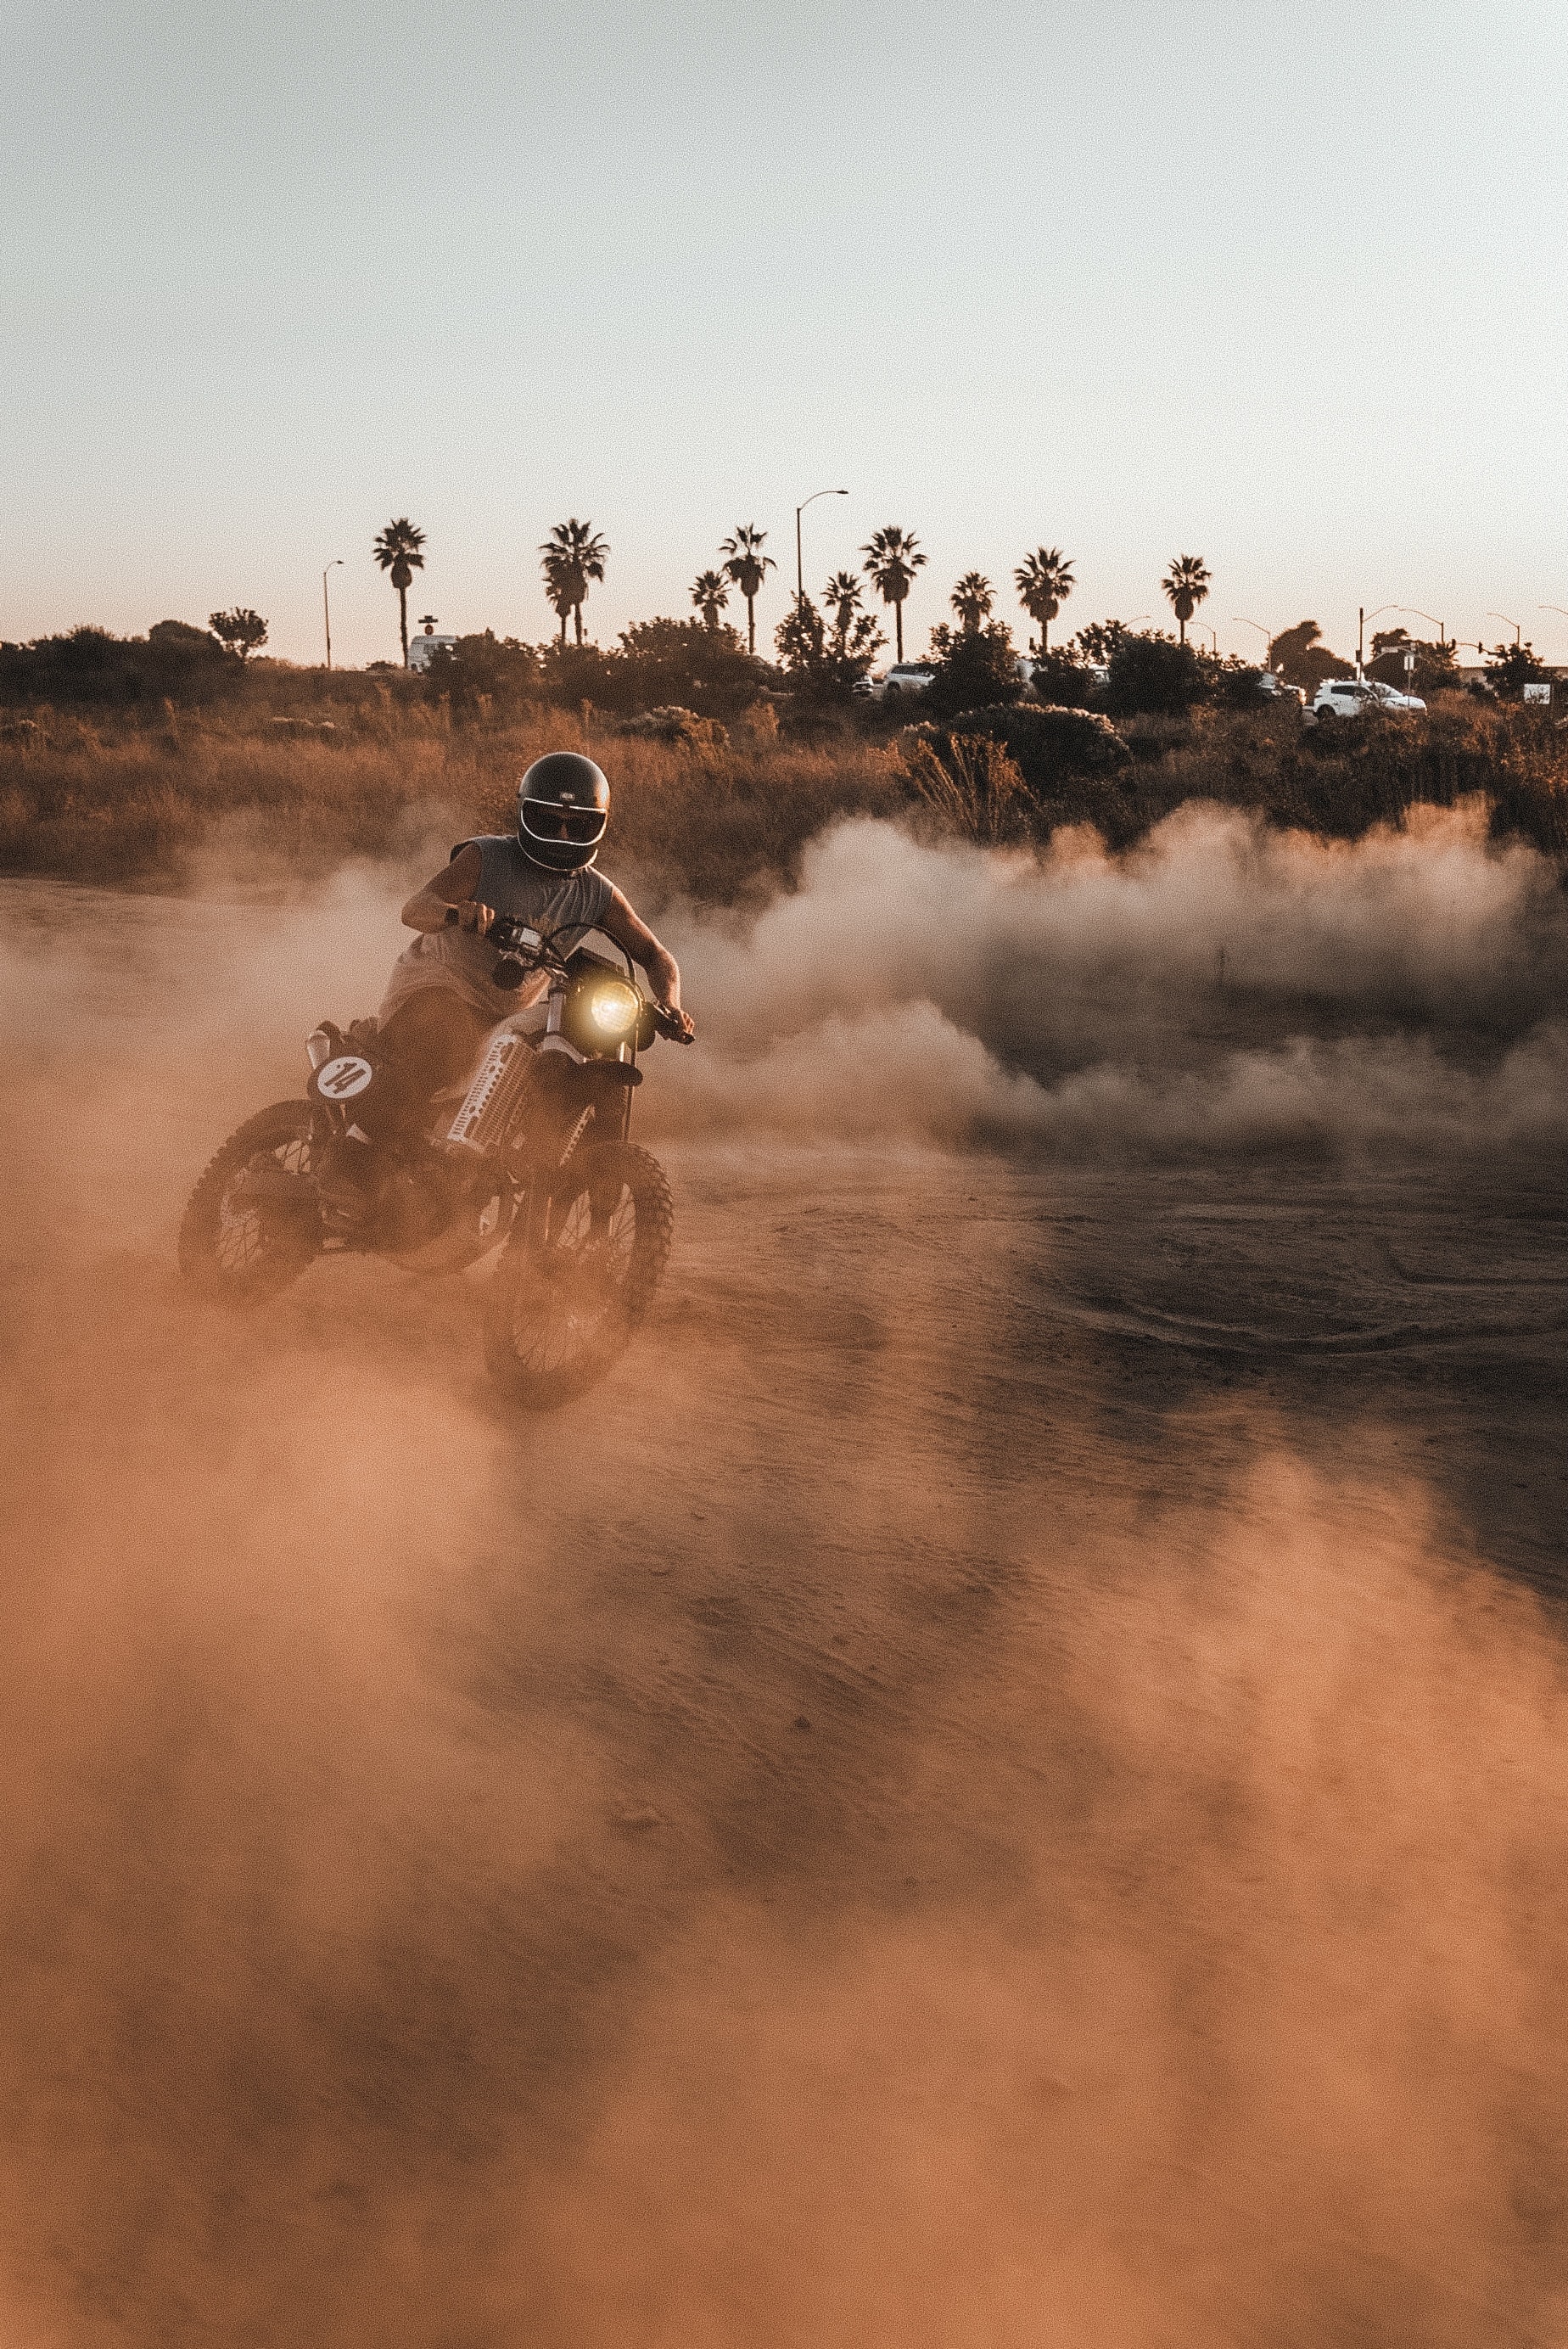 motorcyclist, motorcycles, motorcycle, dust, cross Image for desktop